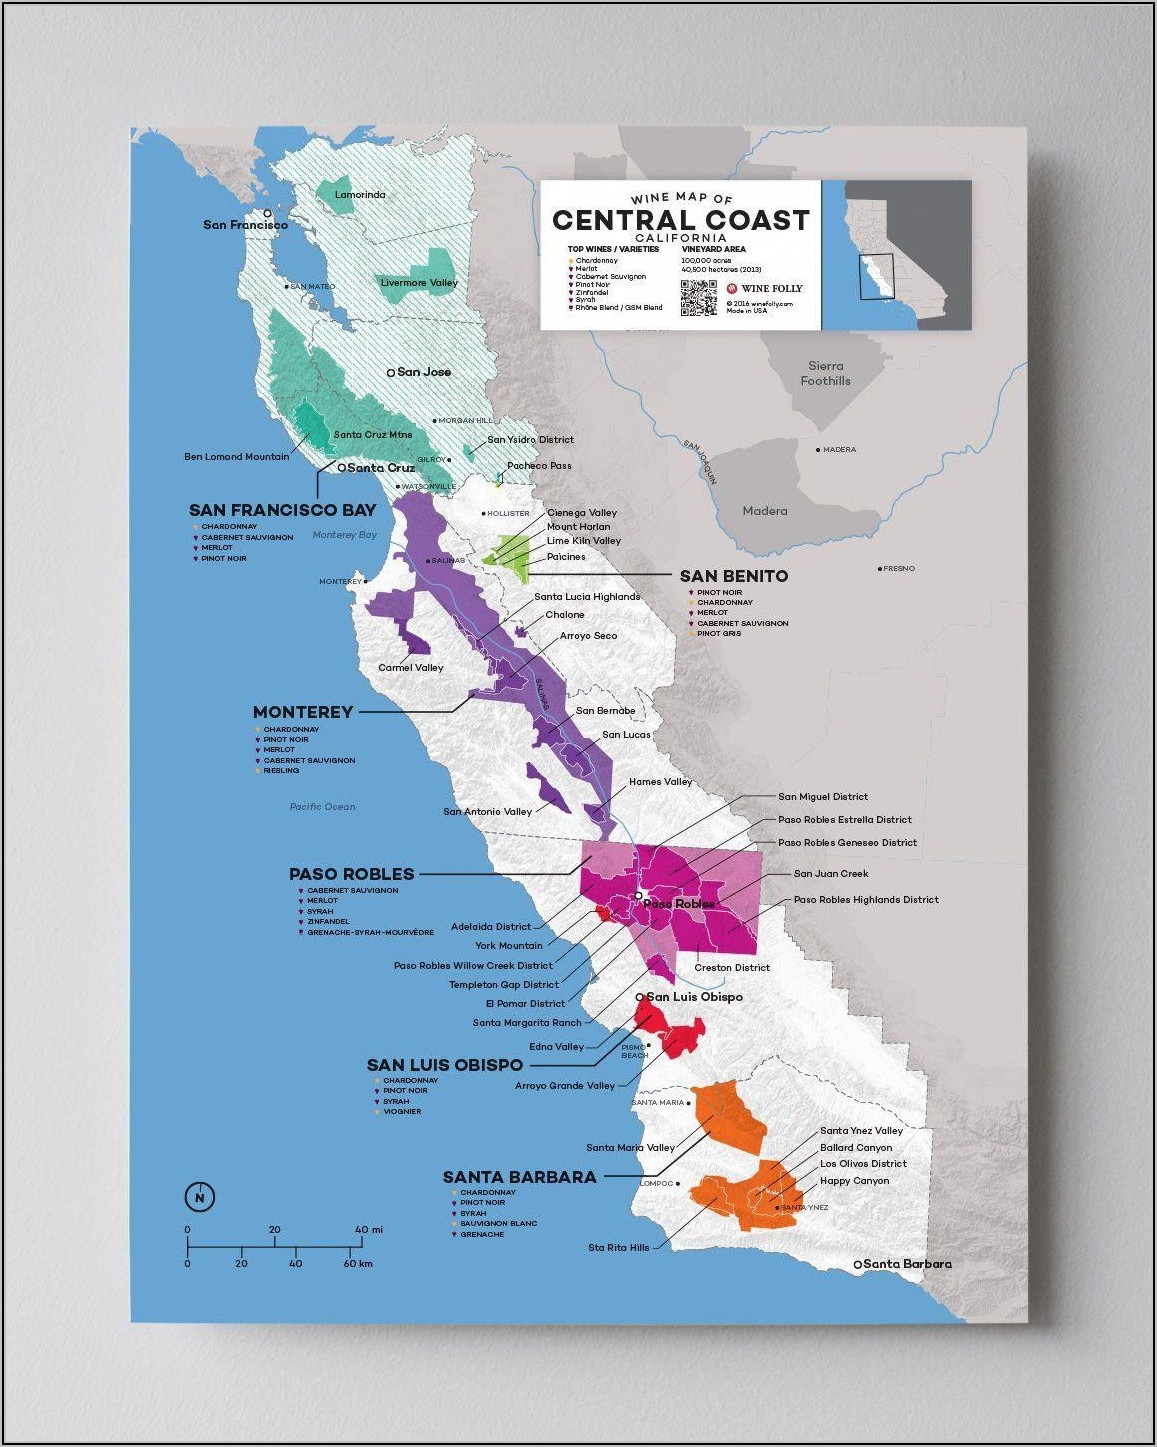 Temecula Wineries Map 2019